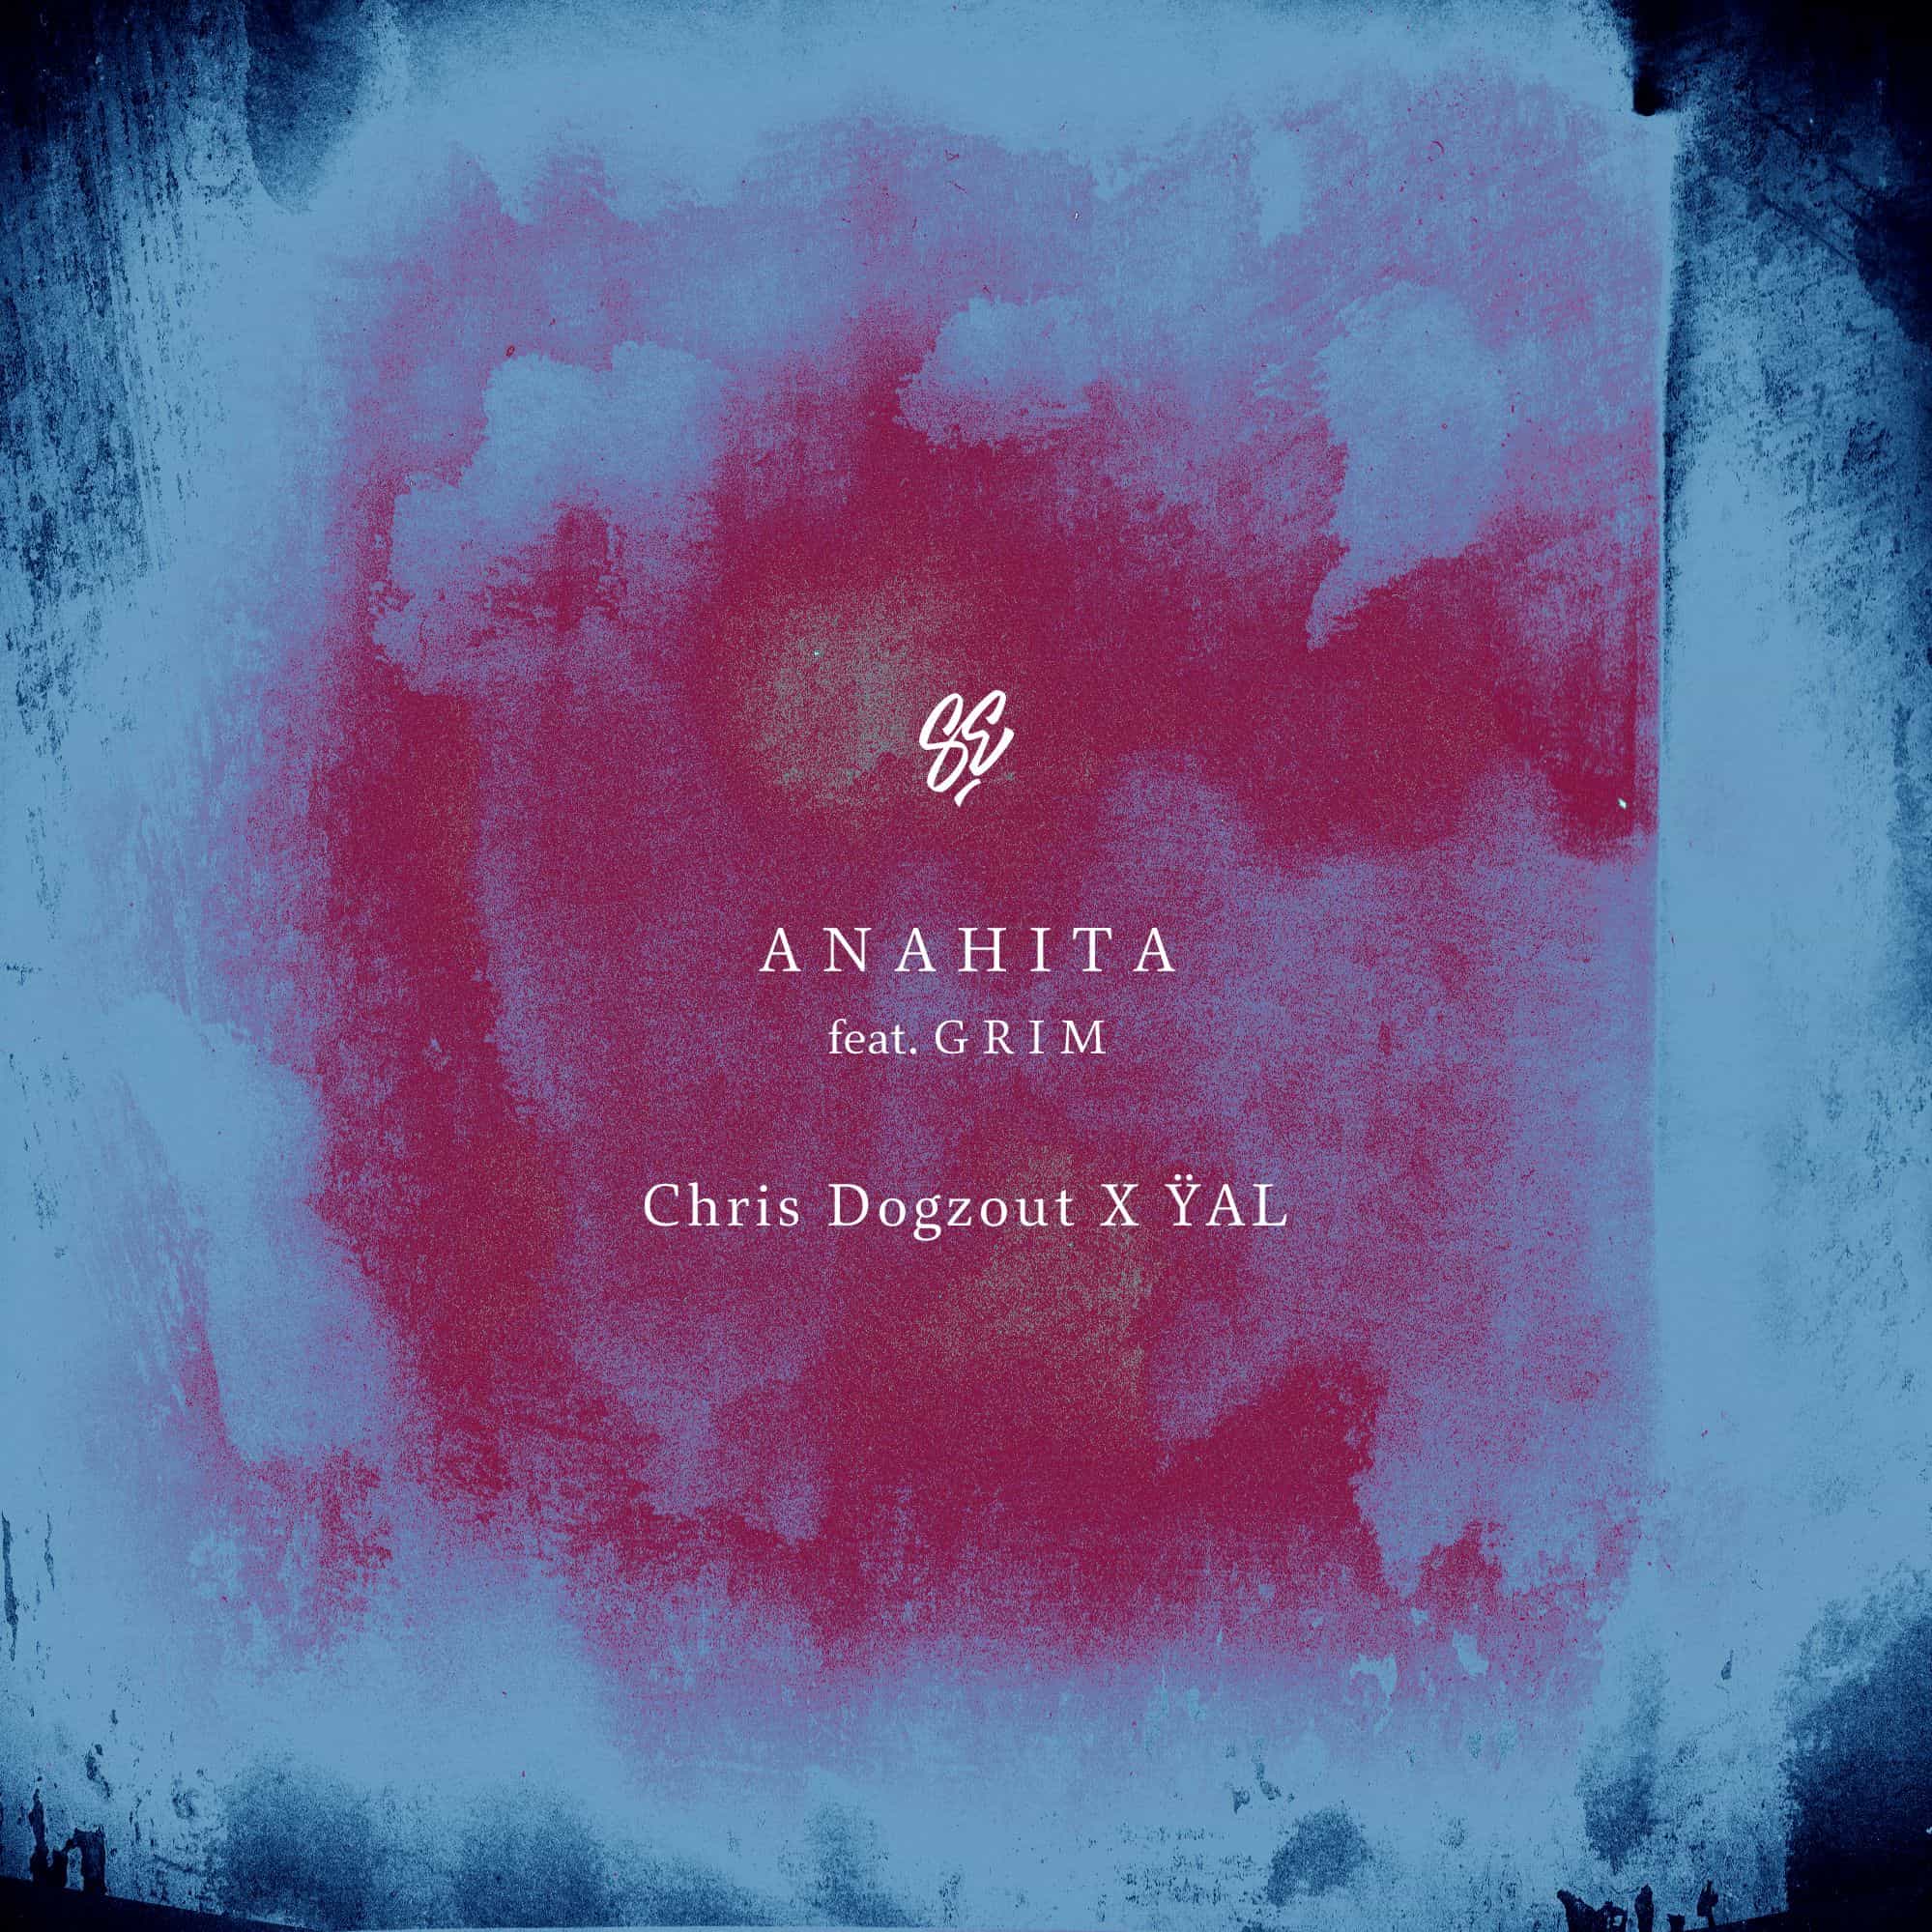 CHRIS DOUGZOUT X ŸAL - ANAHITA FT. GRIM